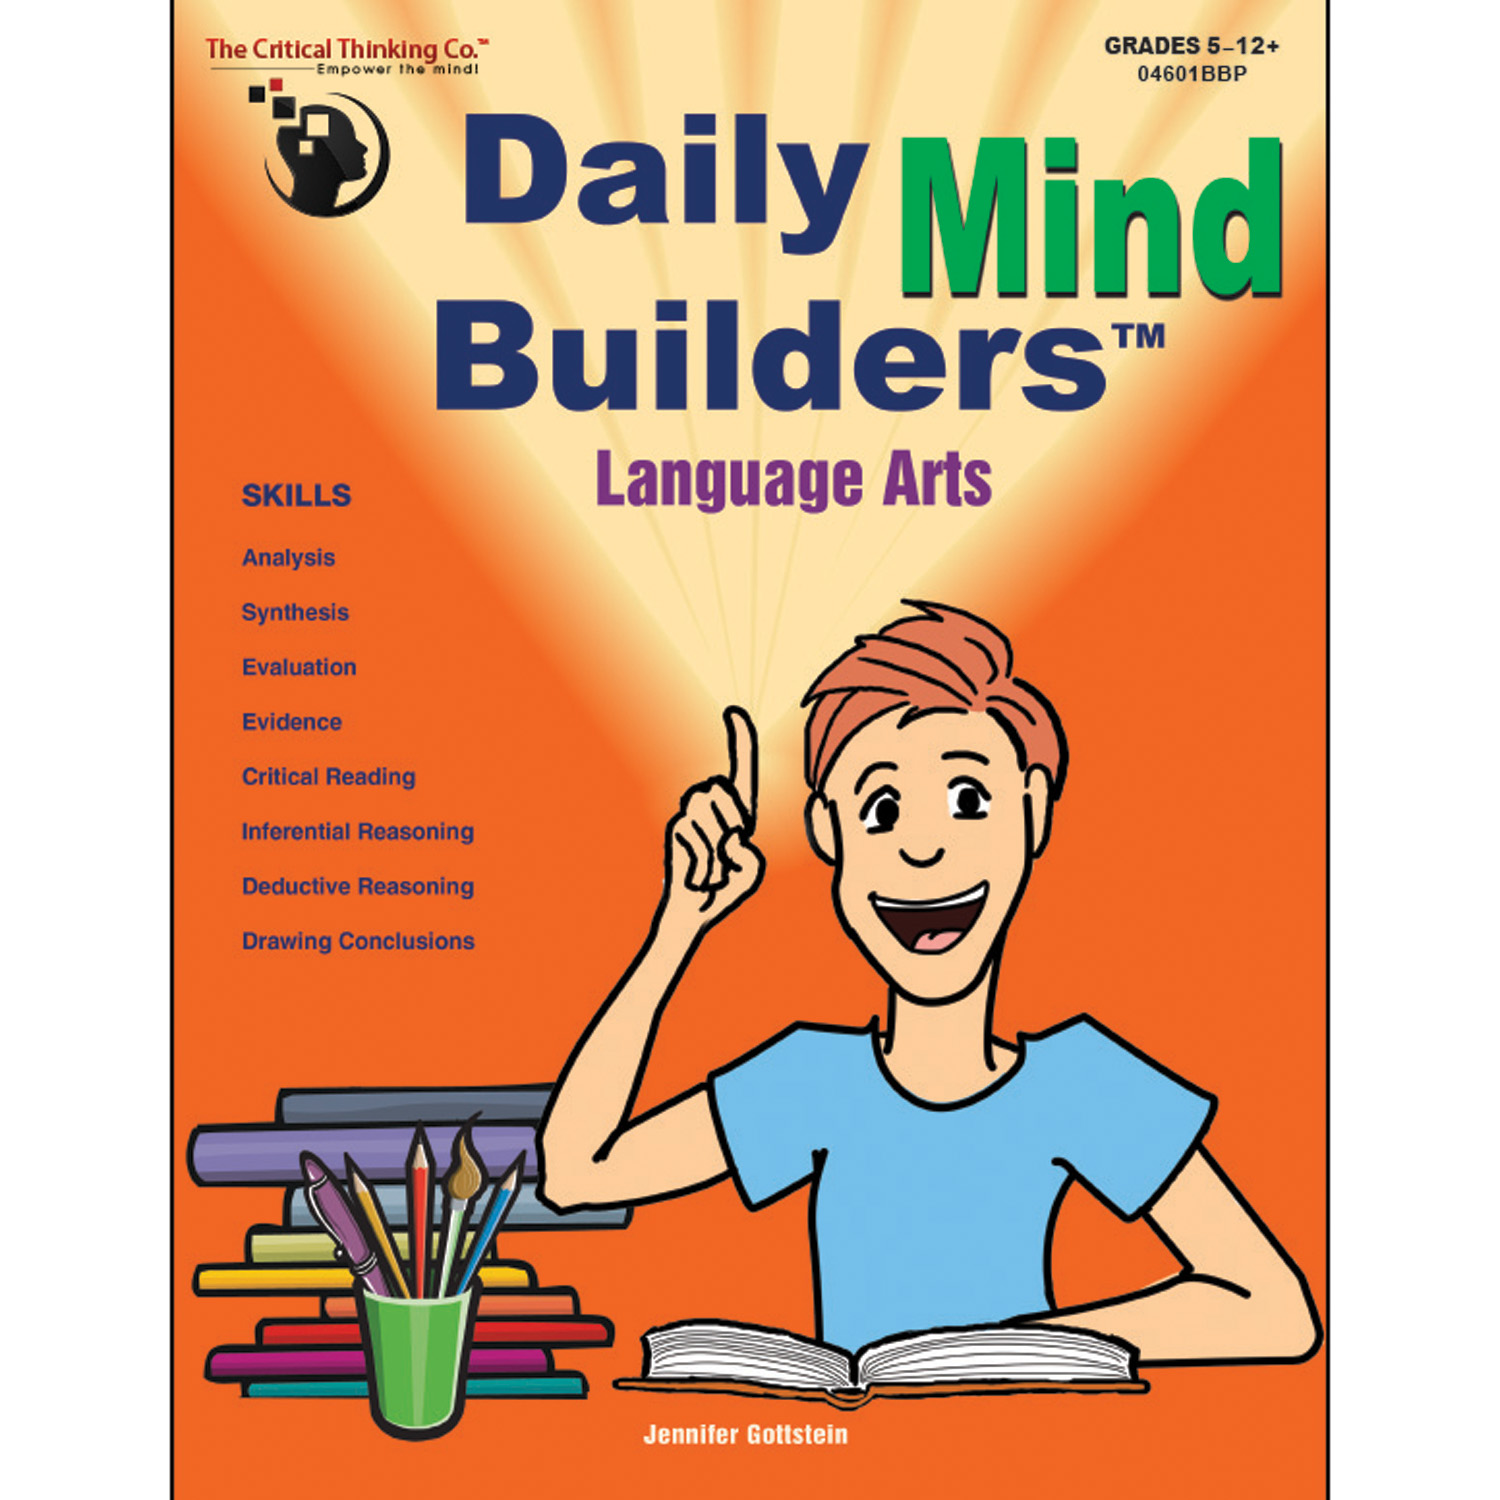 Daily Mind Builders: Language Arts, Grade 5-12